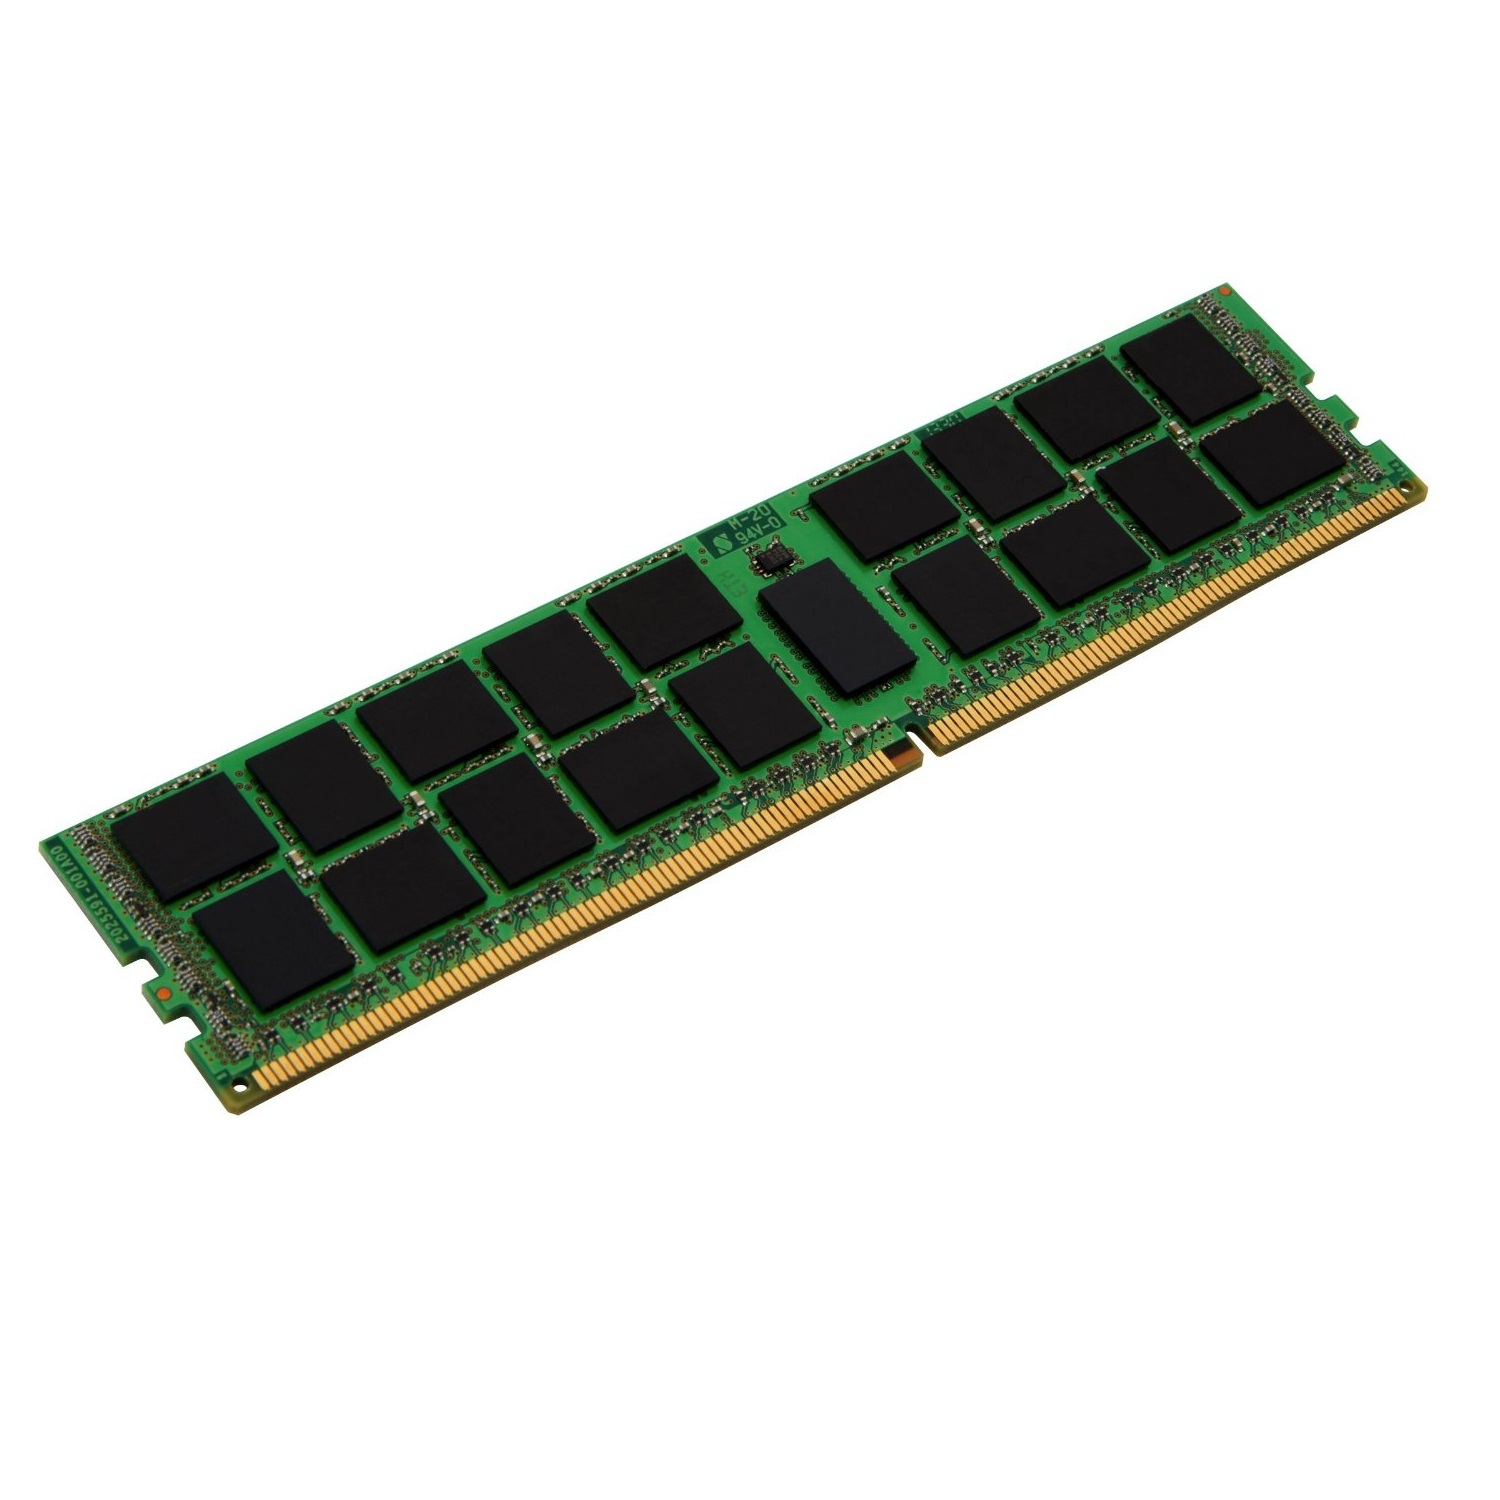 RAM Kingston 4Gb DDR4 2133 Non-ECC KVR21N15/4